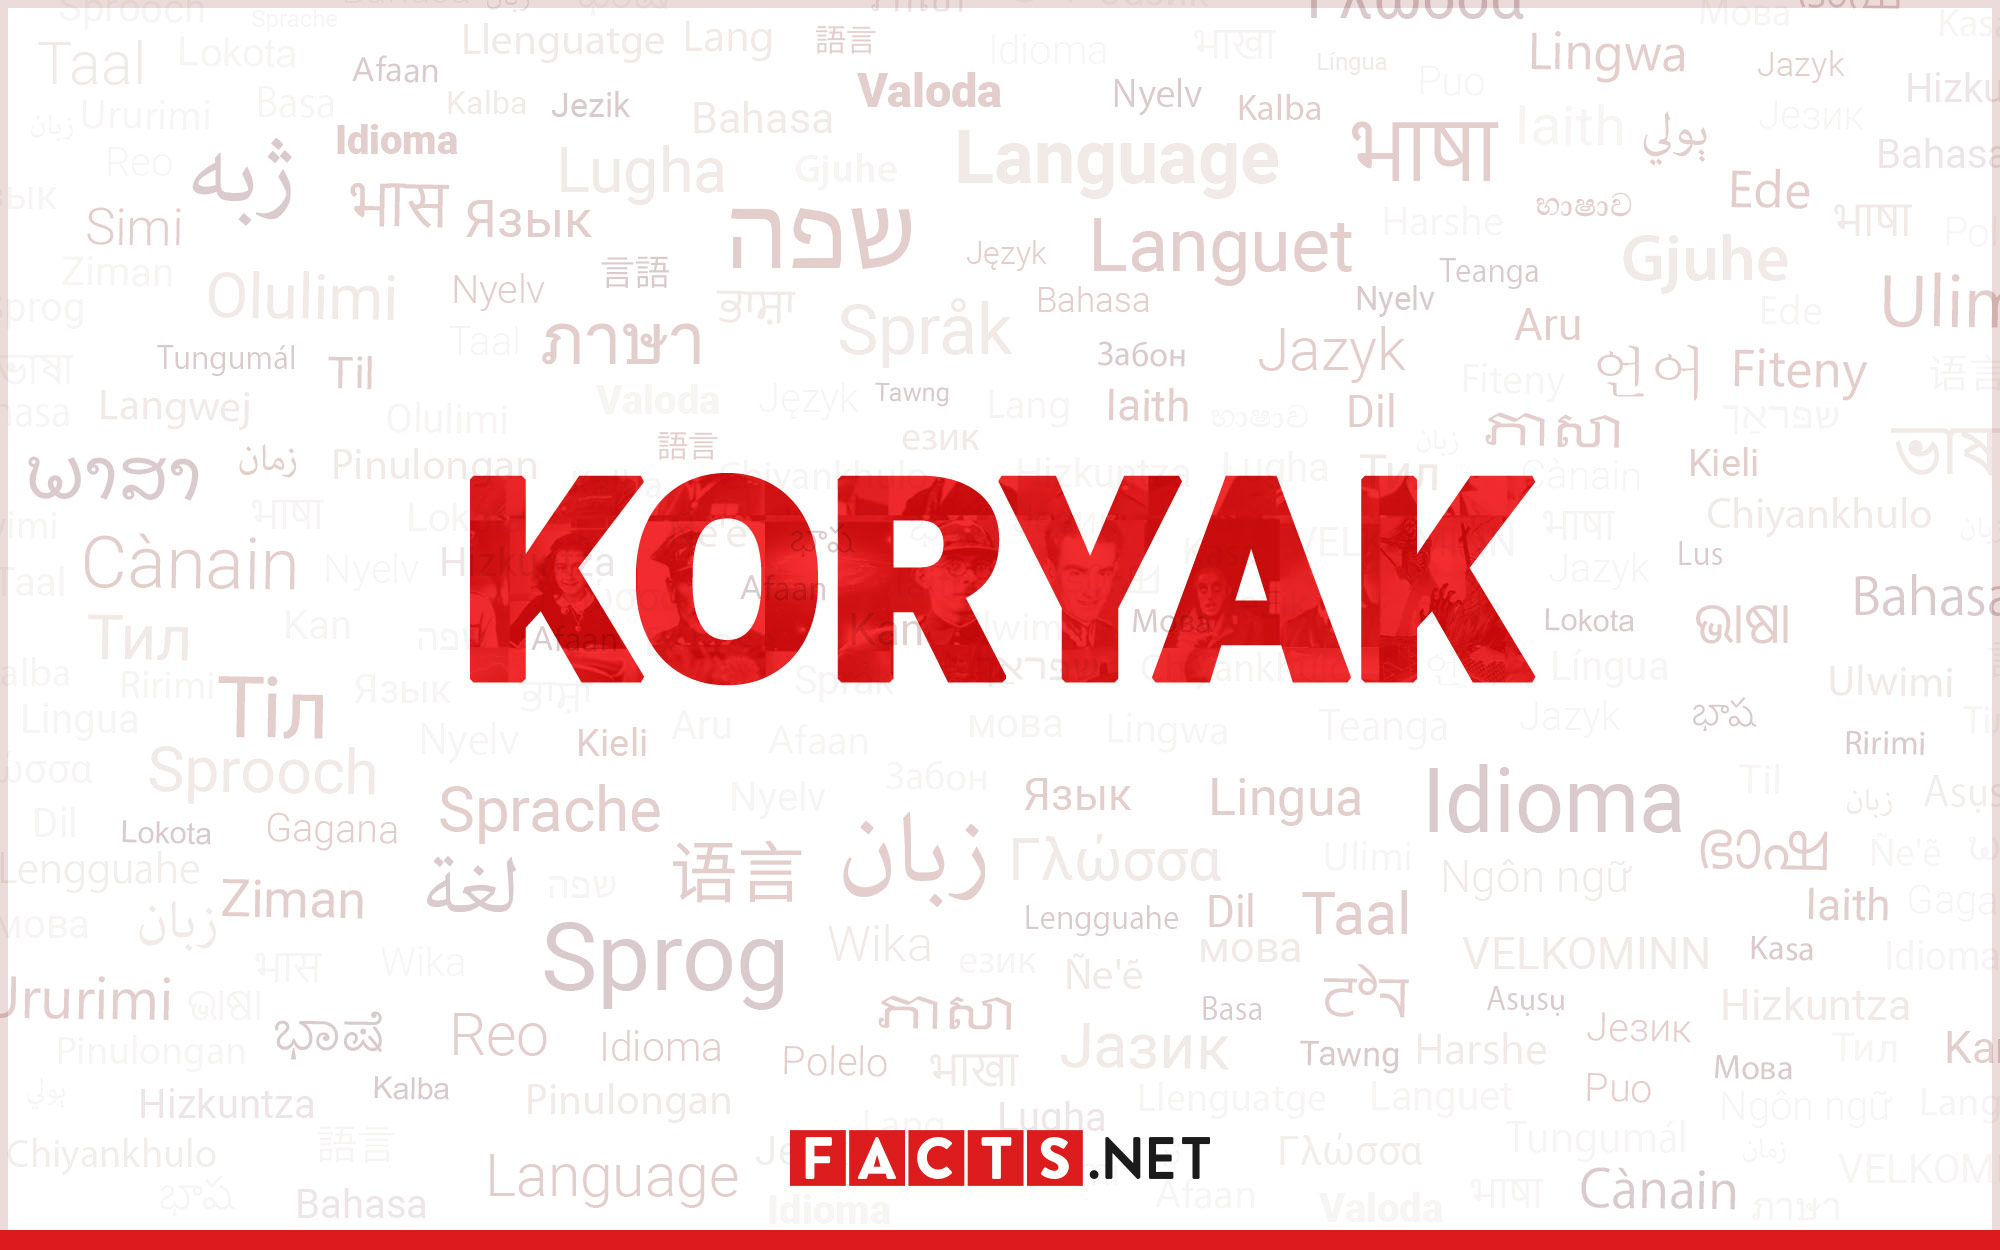 17-intriguing-facts-about-koryak